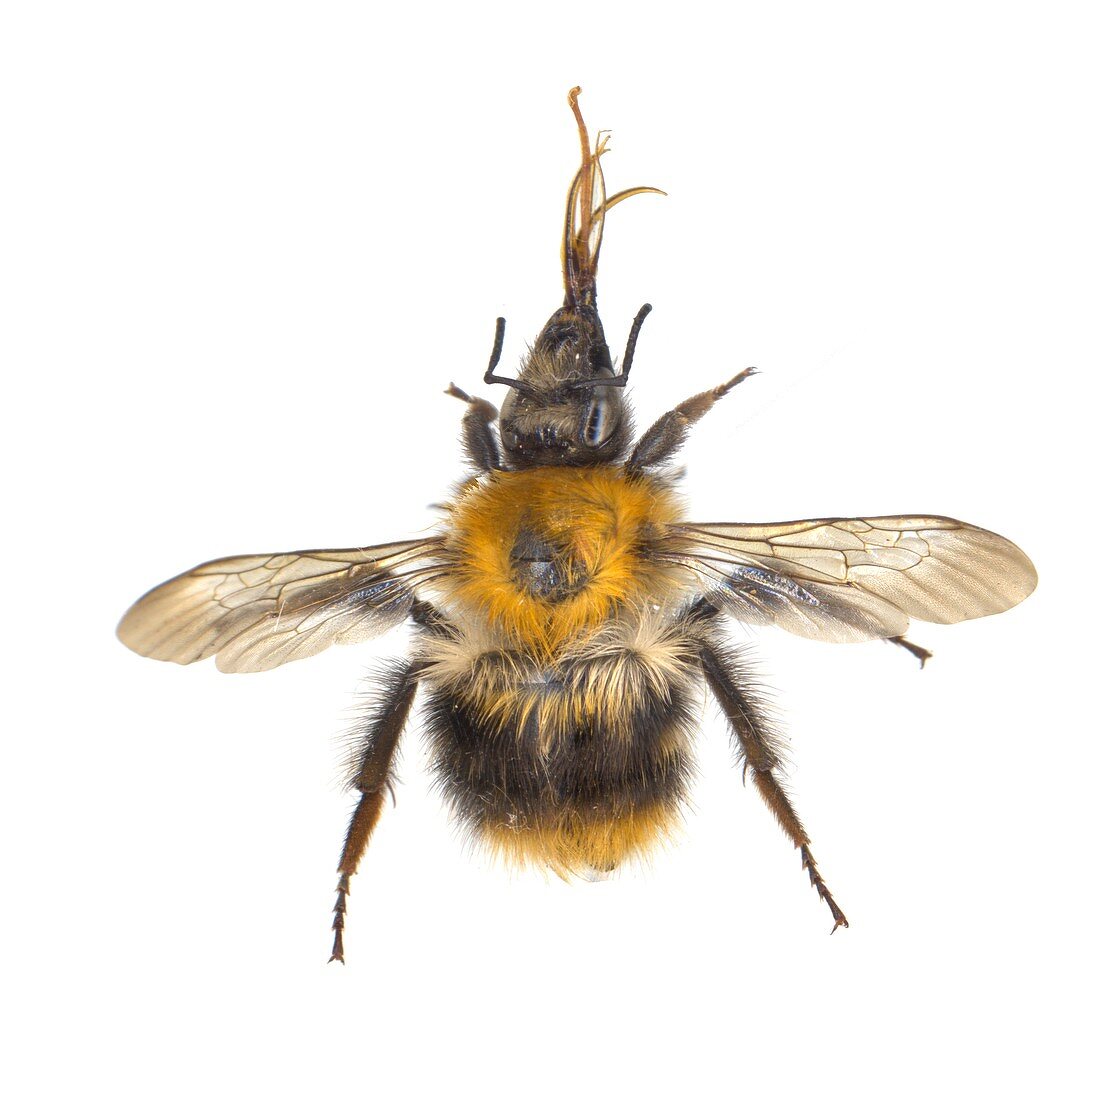 Anthophora hispanica bee